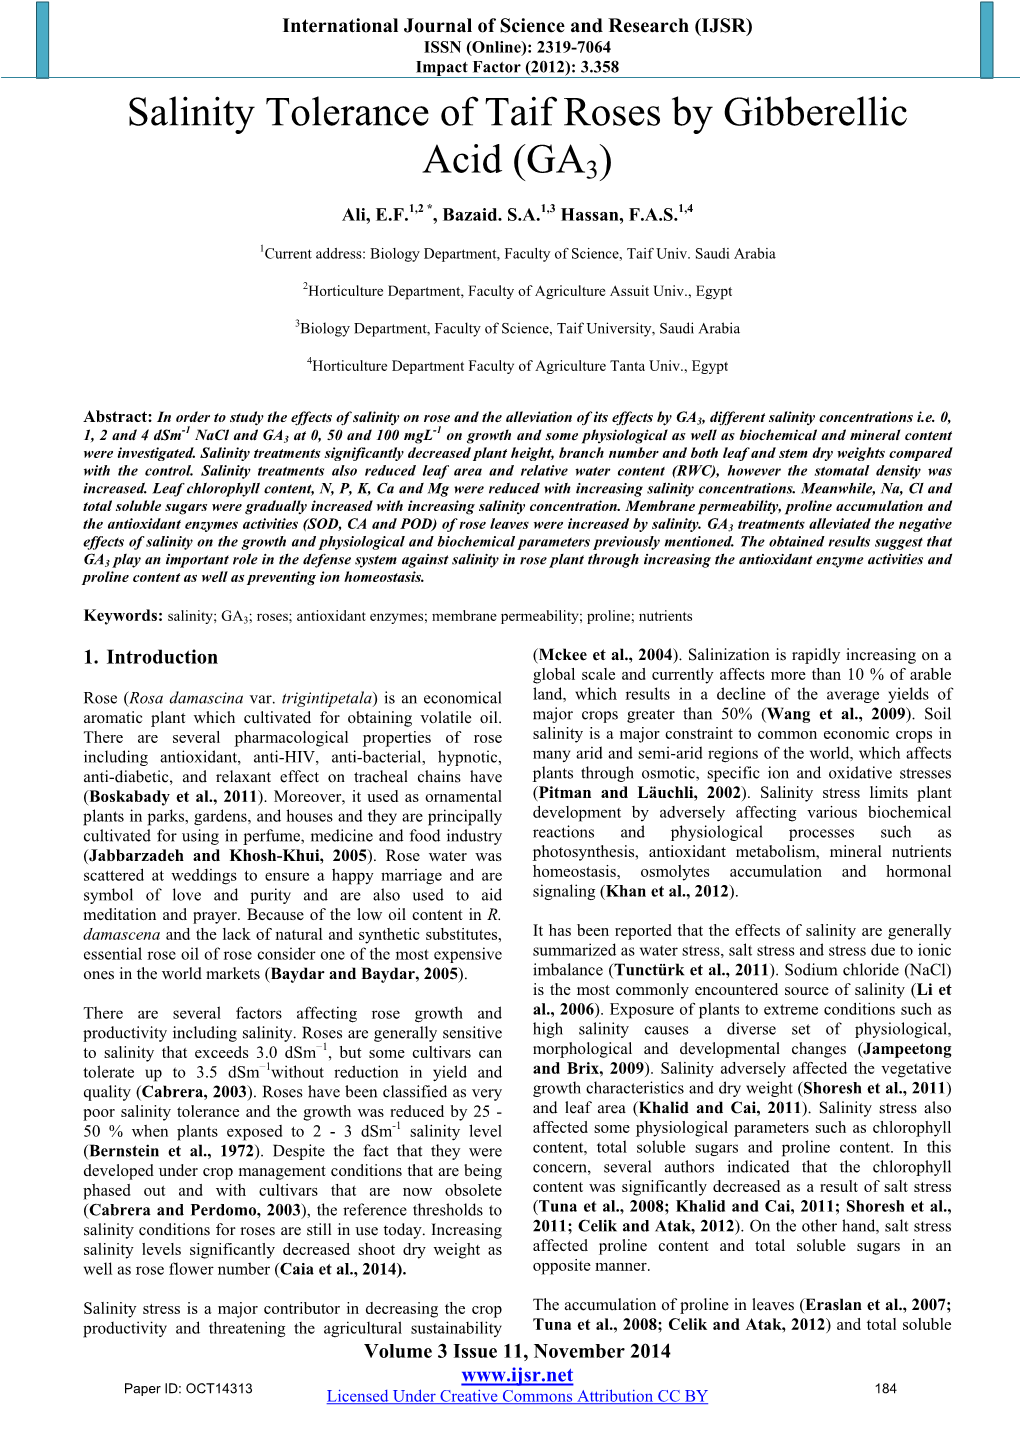 Salinity Tolerance of Taif Roses by Gibberellic Acid (GA3)